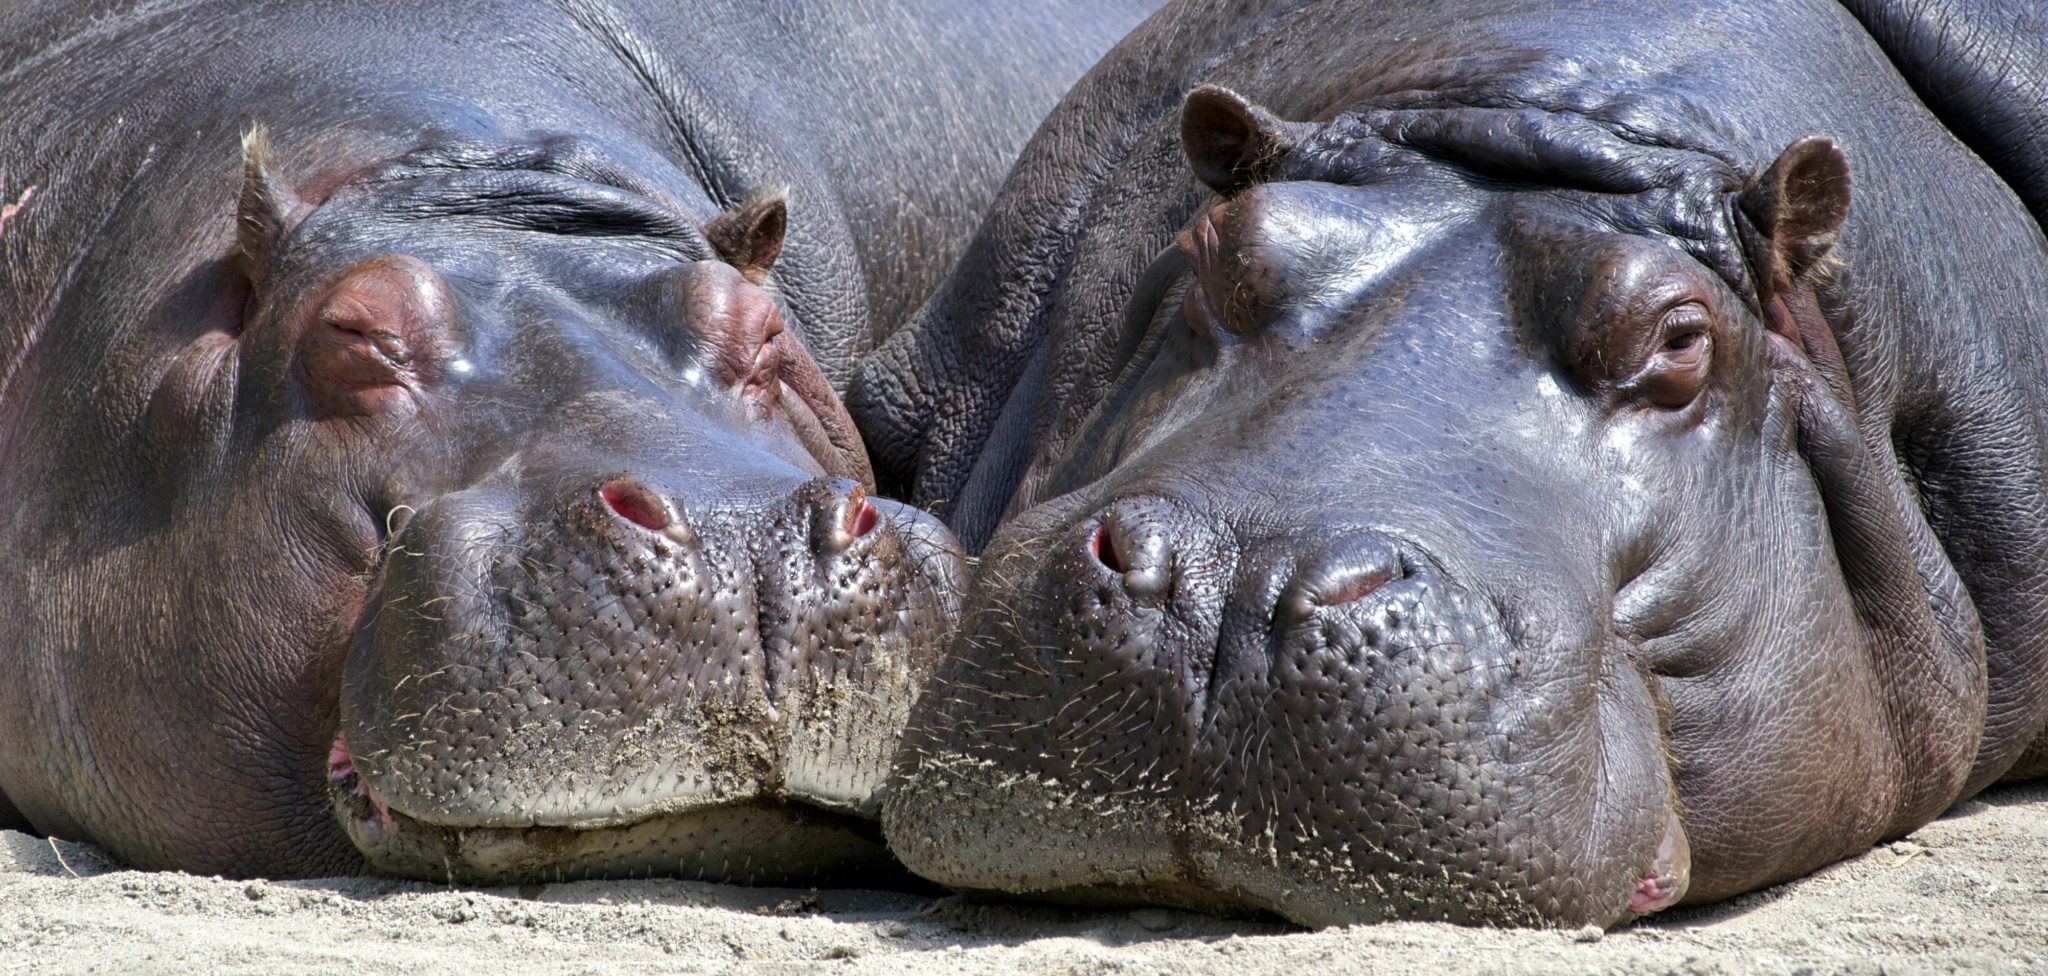 Two hippos